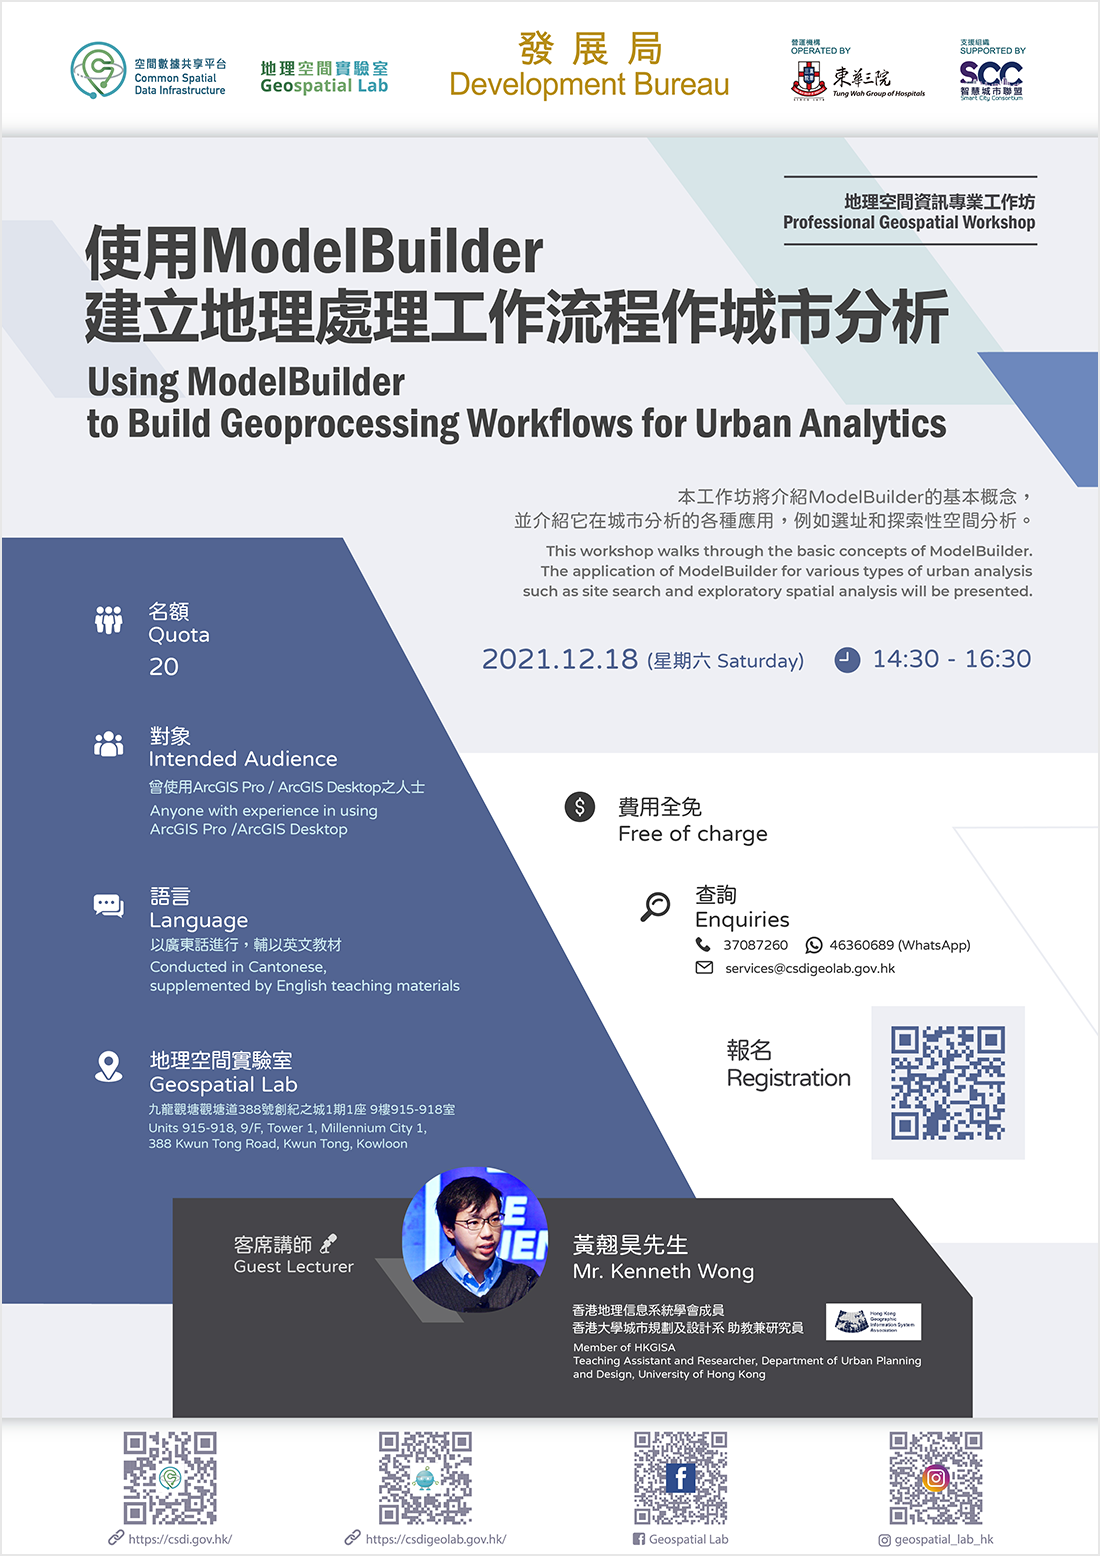 Professional Geospatial Workshop - Using ModelBuilder to Build Geoprocessing Workflows for Urban Analytics